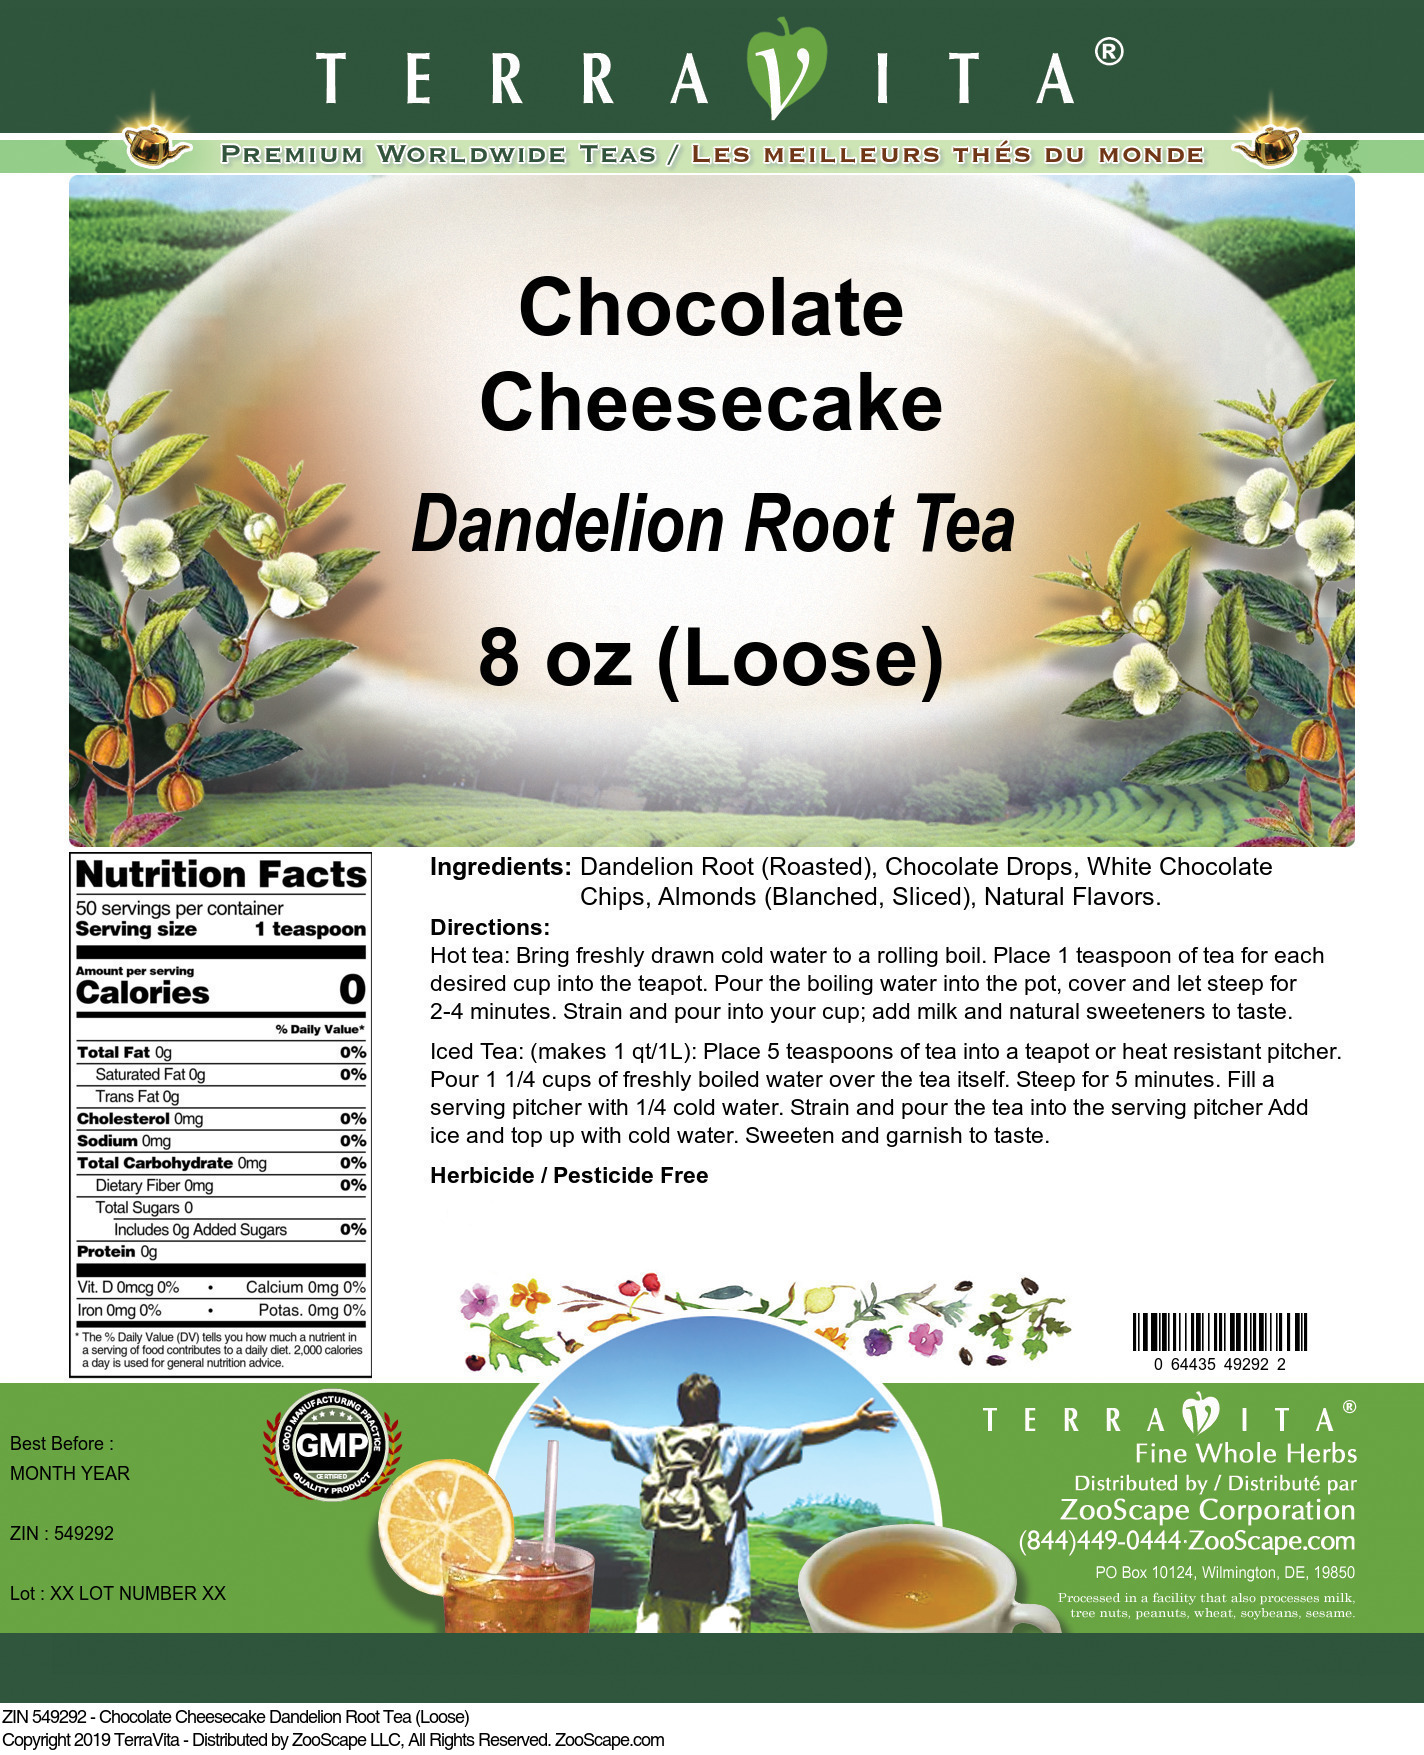 Chocolate Cheesecake Dandelion Root Tea (Loose) - Label